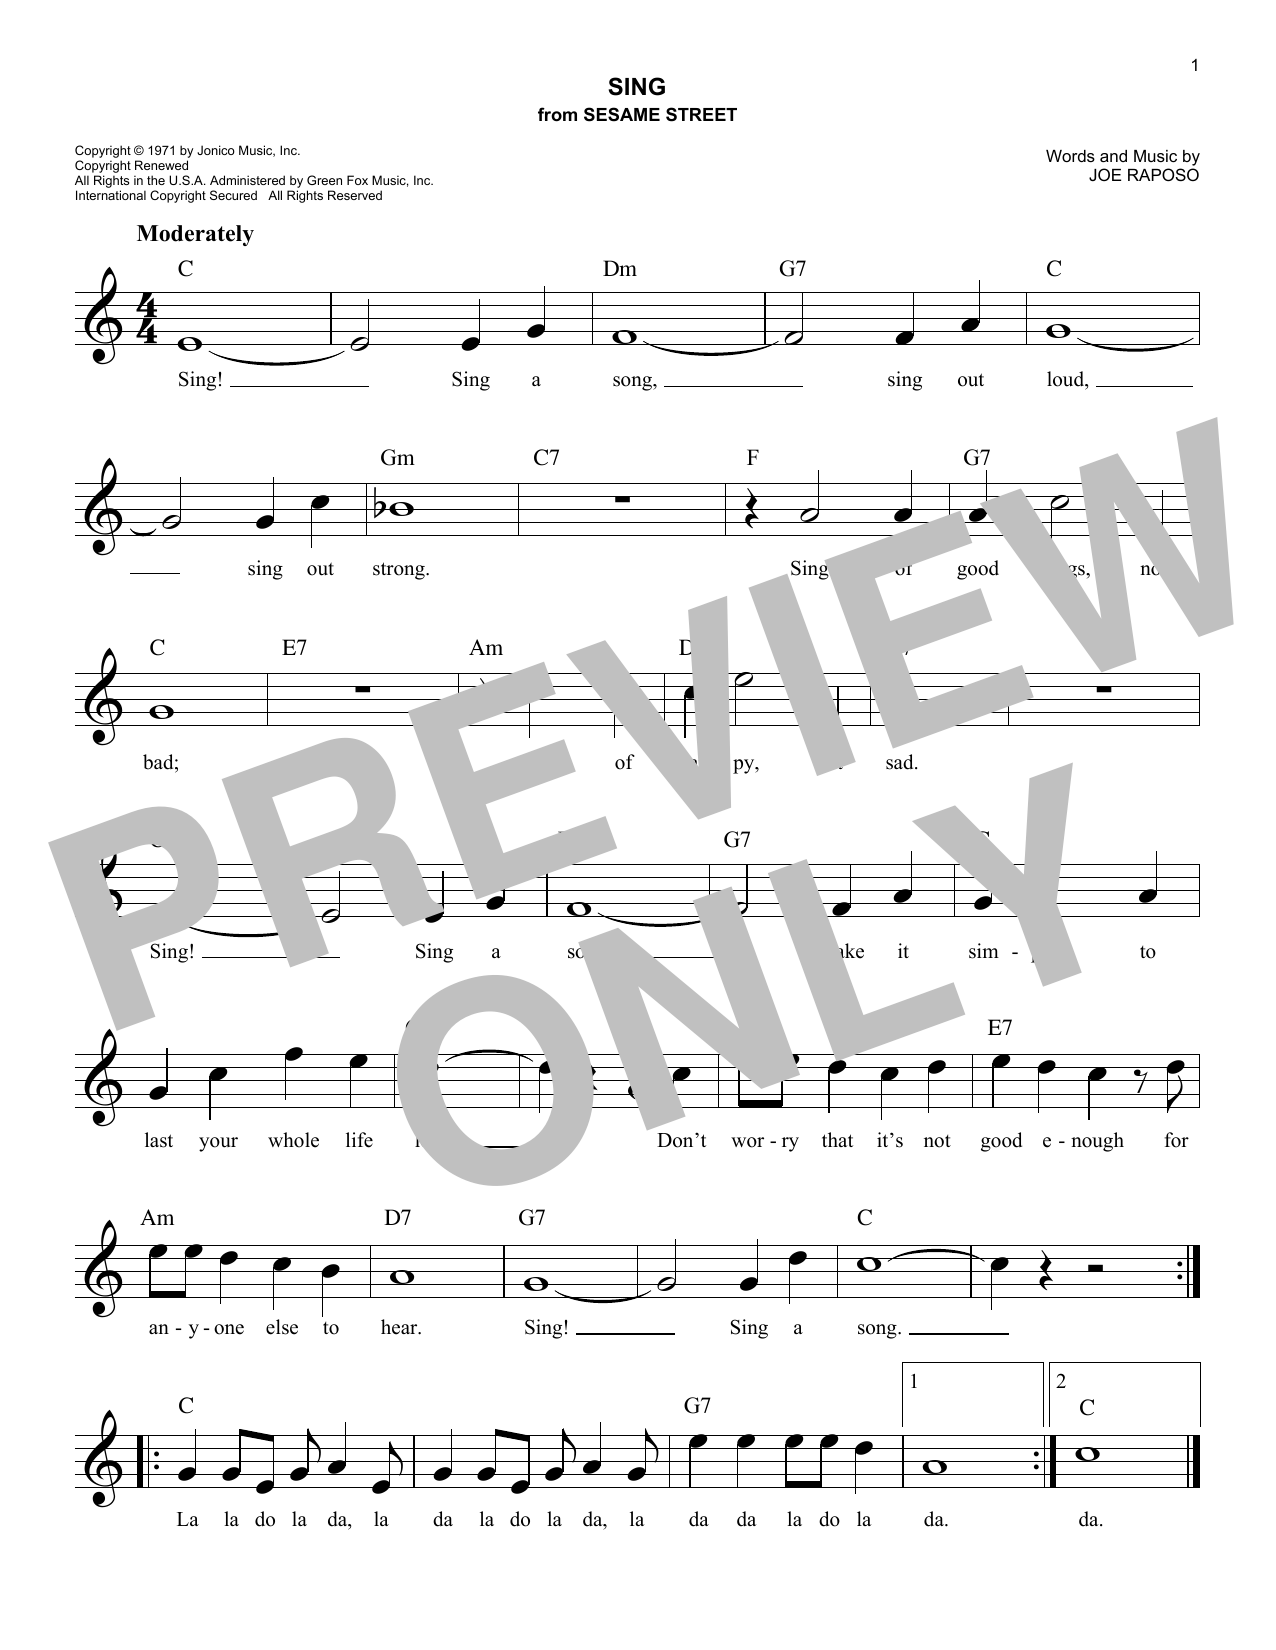 Download Joe Raposo Sing Sheet Music and learn how to play Baritone Ukulele PDF digital score in minutes